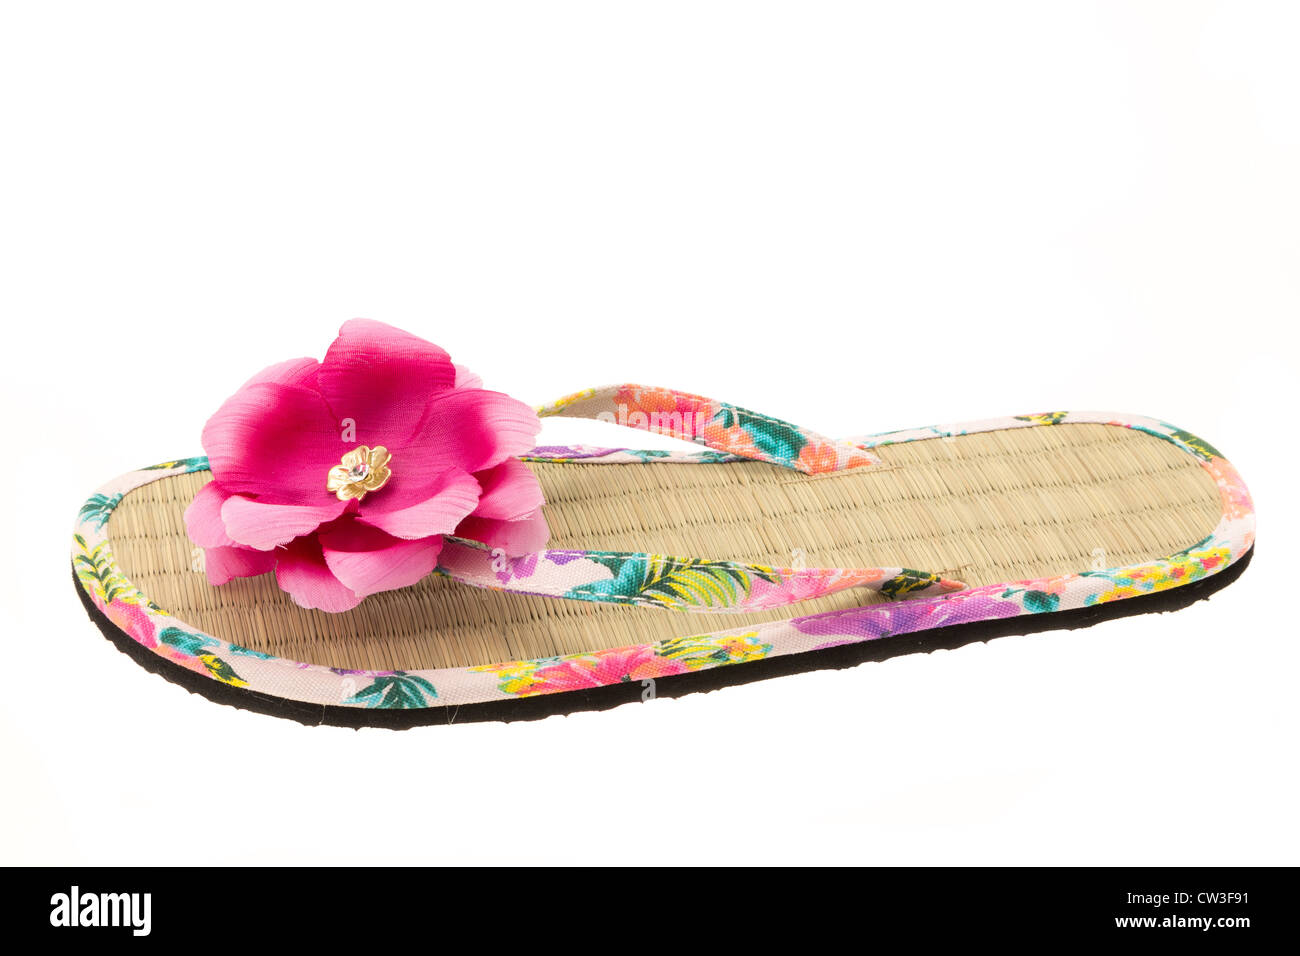 Ladies flip-flop summer wear sandals taken in the studio with a white background Stock Photo